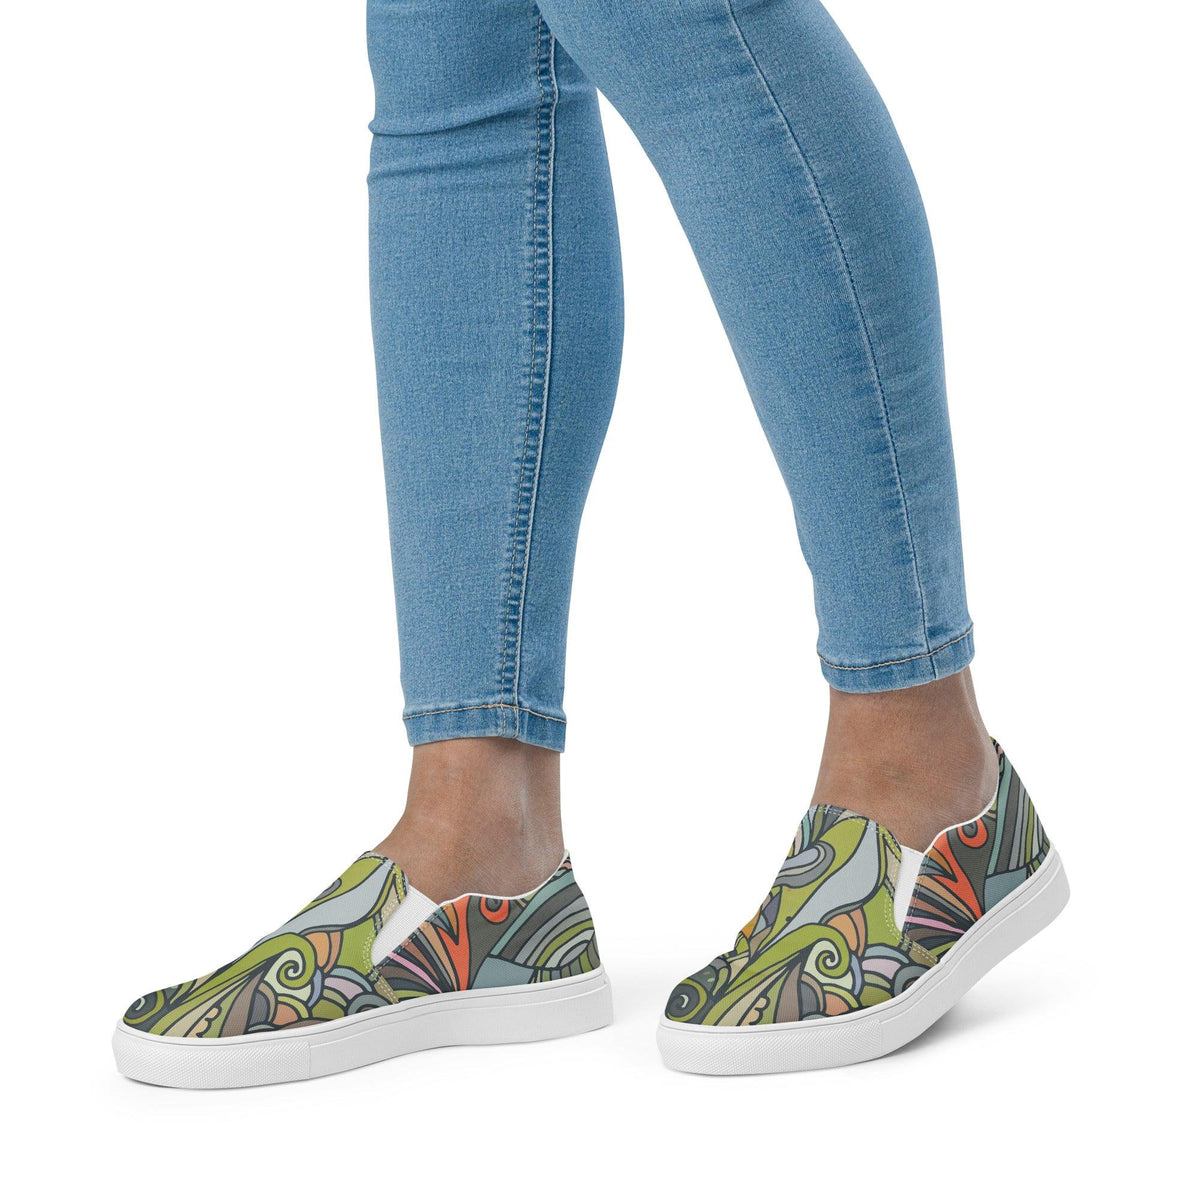 Jana Slip On Women's Canvas Sneakers - Kaleidoscope Paisley Print Wild Funky Retro Swirls Bold Vibrant Fun Slide Shoes Blissfully Brand